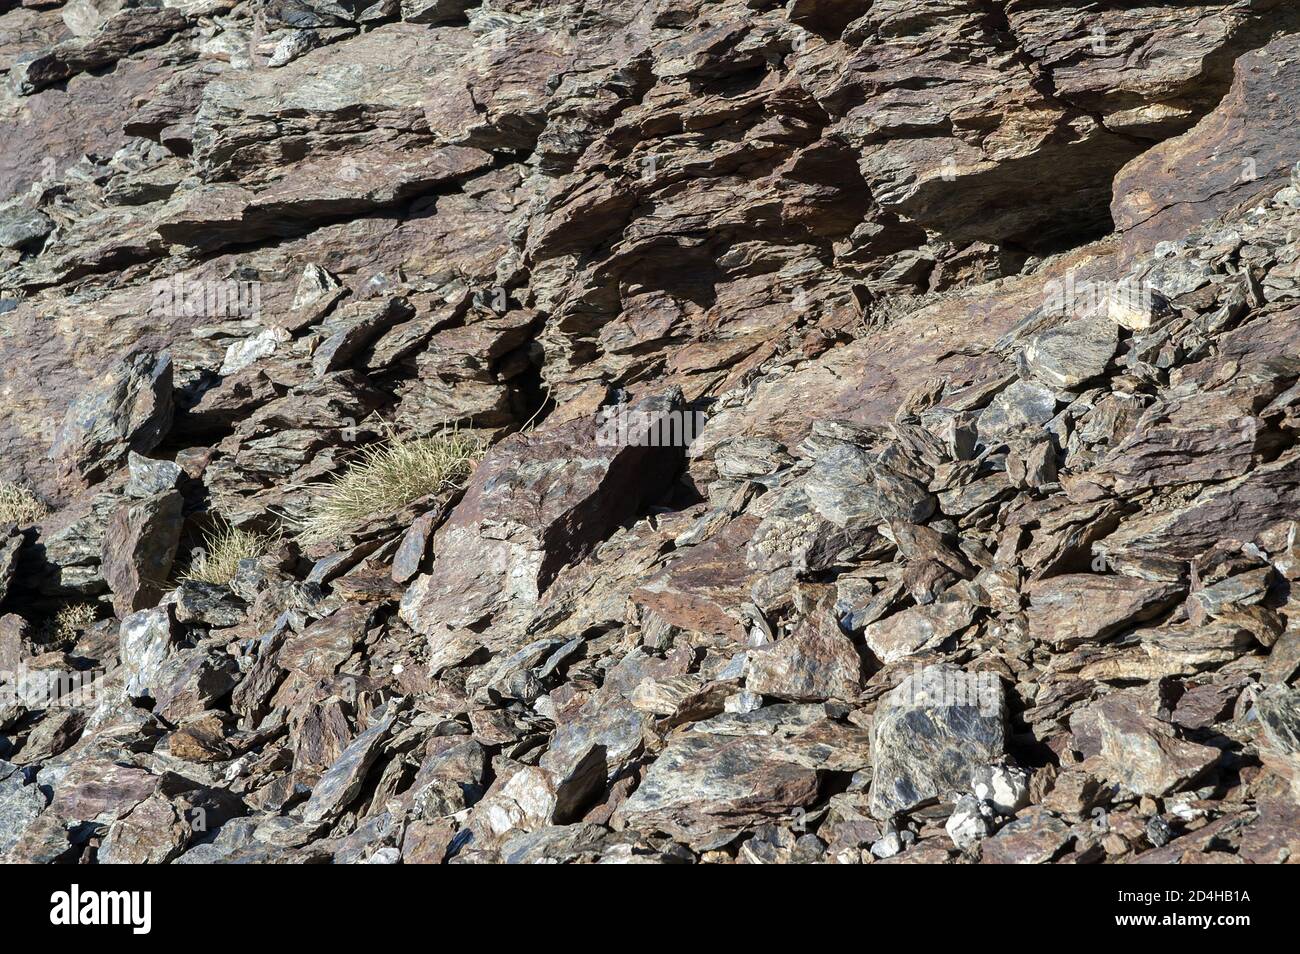 Sierra Nevada, España, Hiszpania, Spain, Spanien; Metamorphic rocks in the upper part of the mountains. Metamorphe Gesteine im oberen Teil der Berge Stock Photo